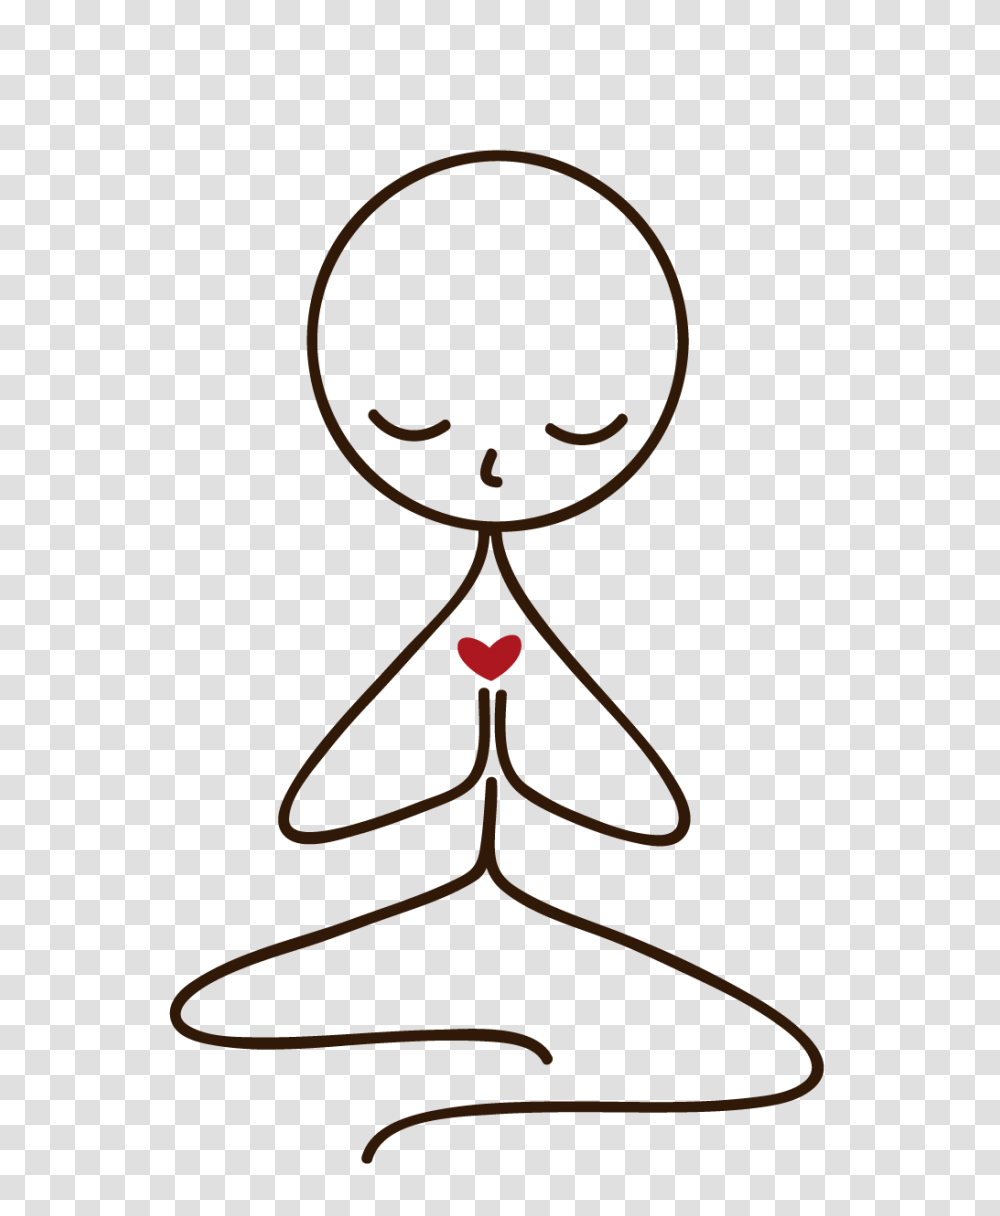 Namasteban In Yoga Meditation And Reiki, Drawing, Doodle Transparent Png